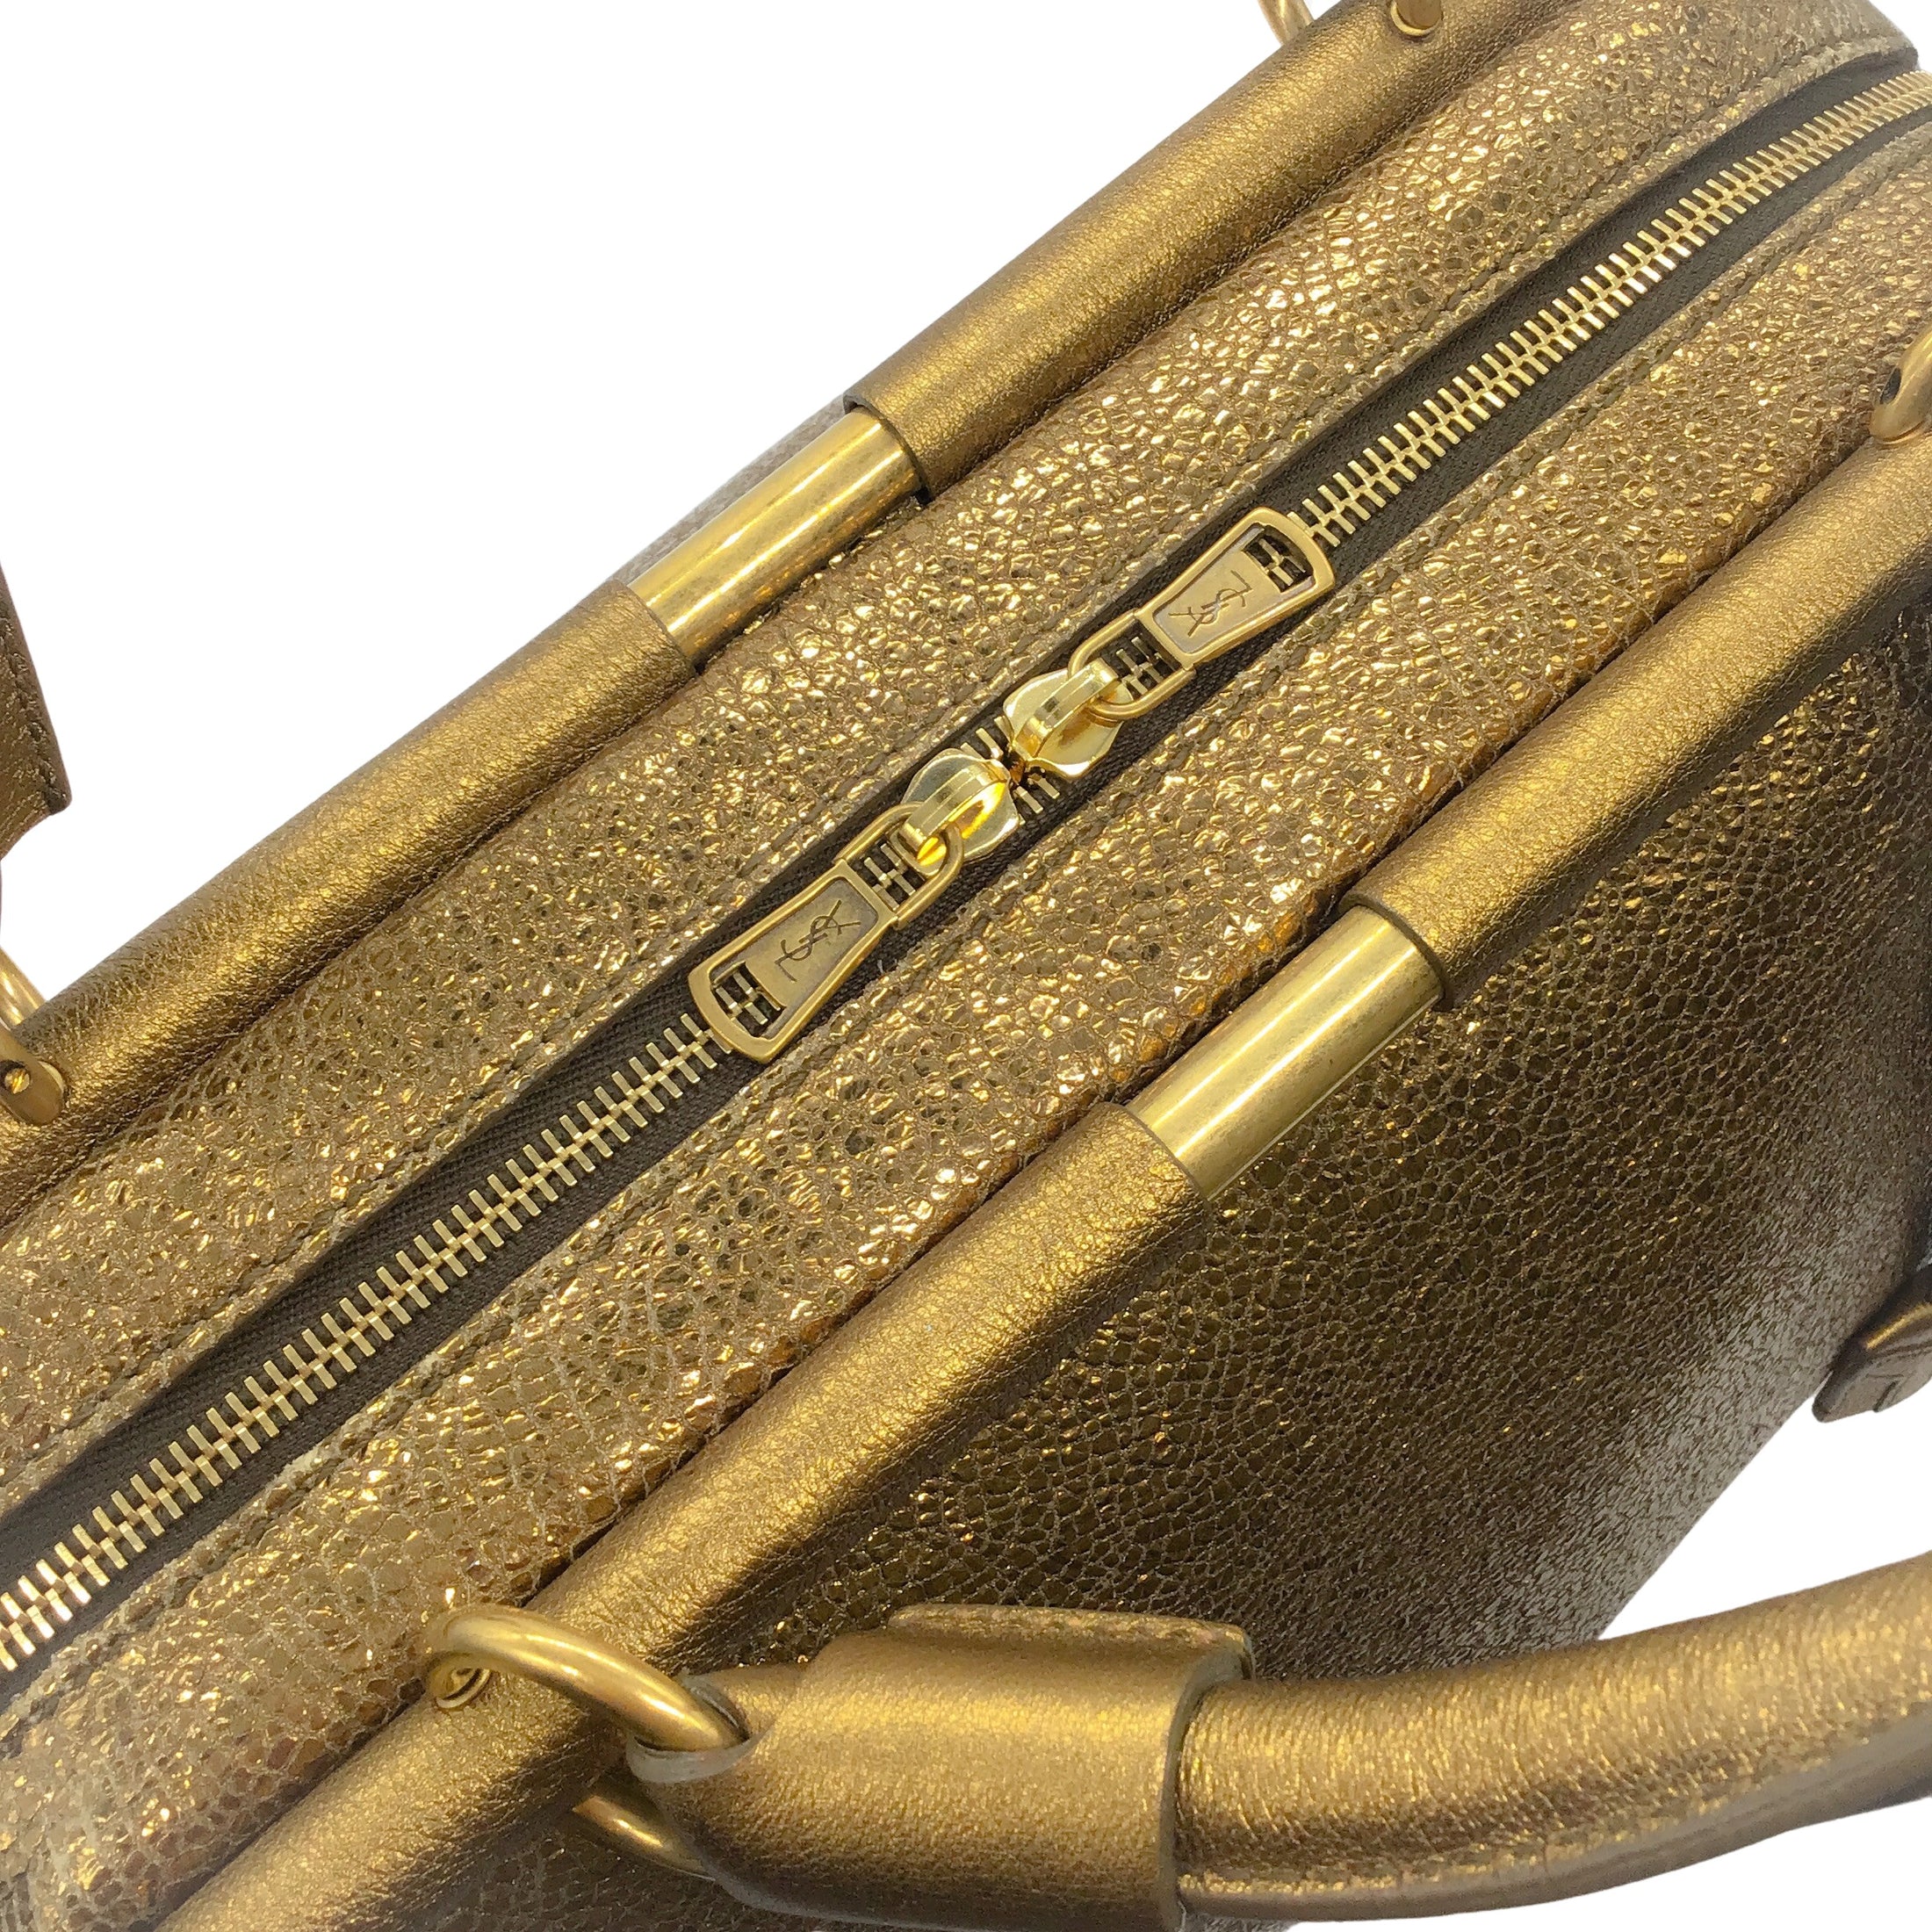 Yves Saint Laurent Gold Metallic Leather Medium Majorelle Shoulder Bag